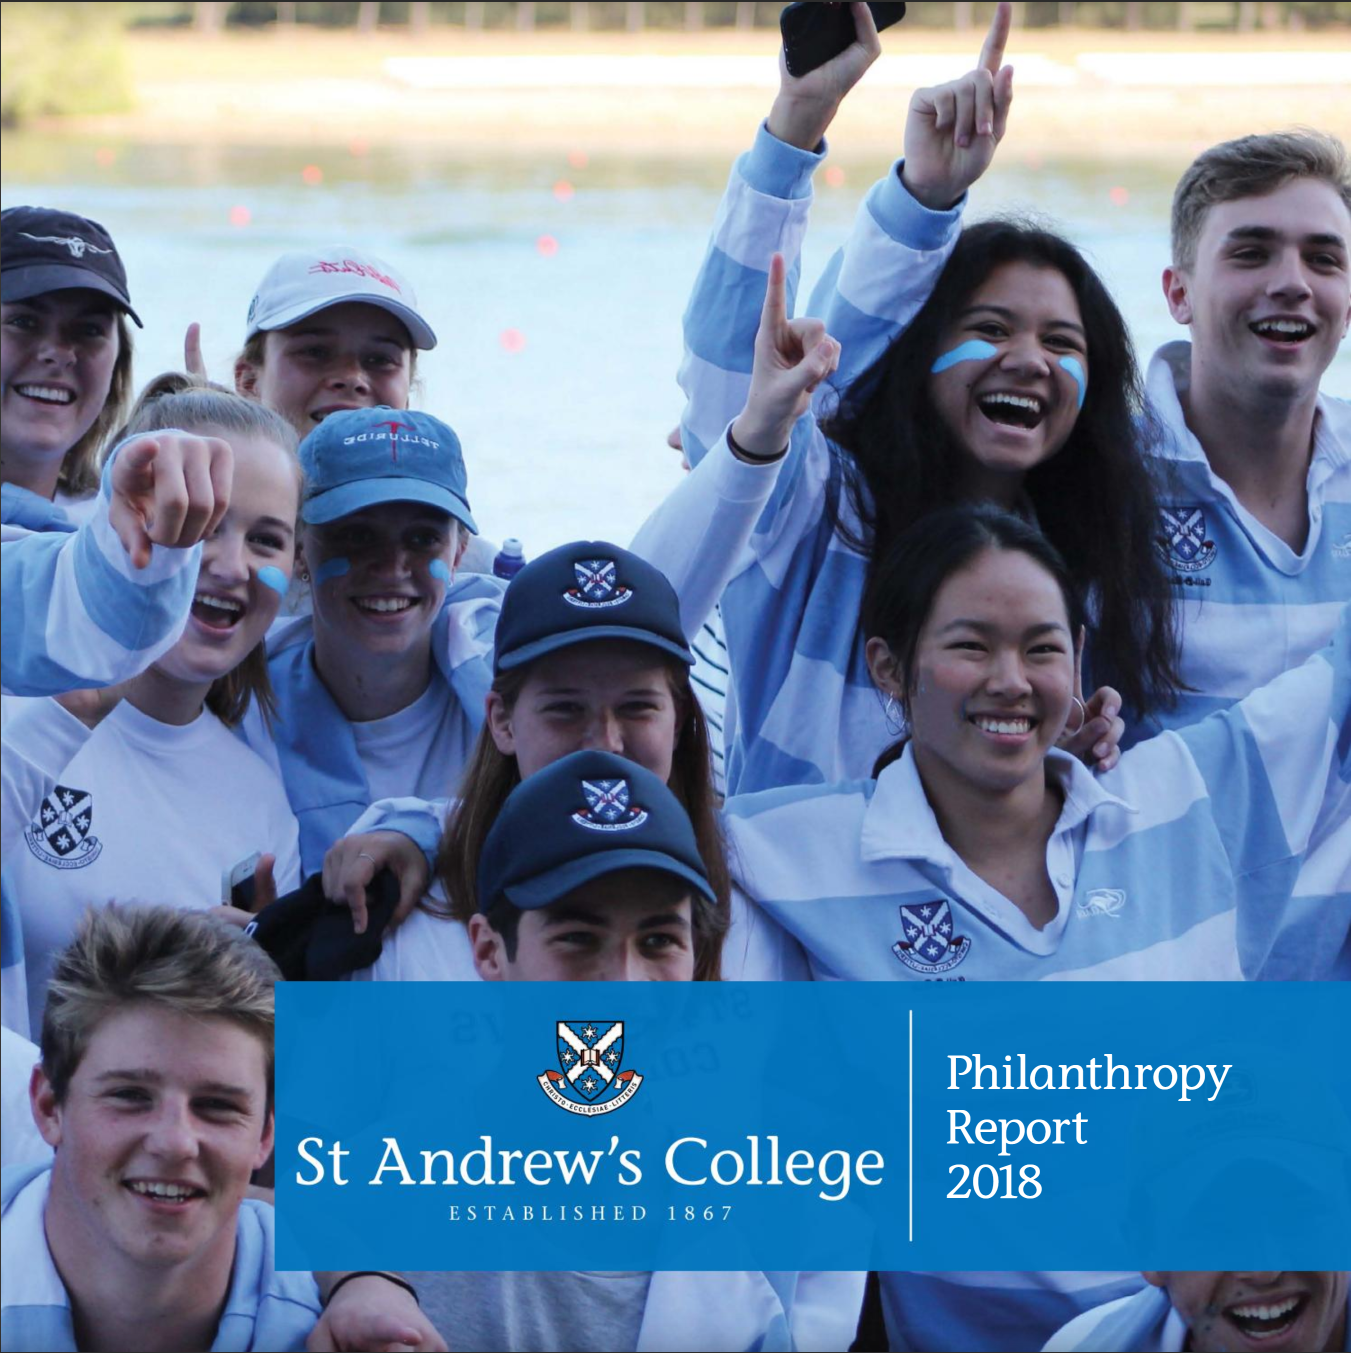 2018 St Andrew's College Philanthropy Report